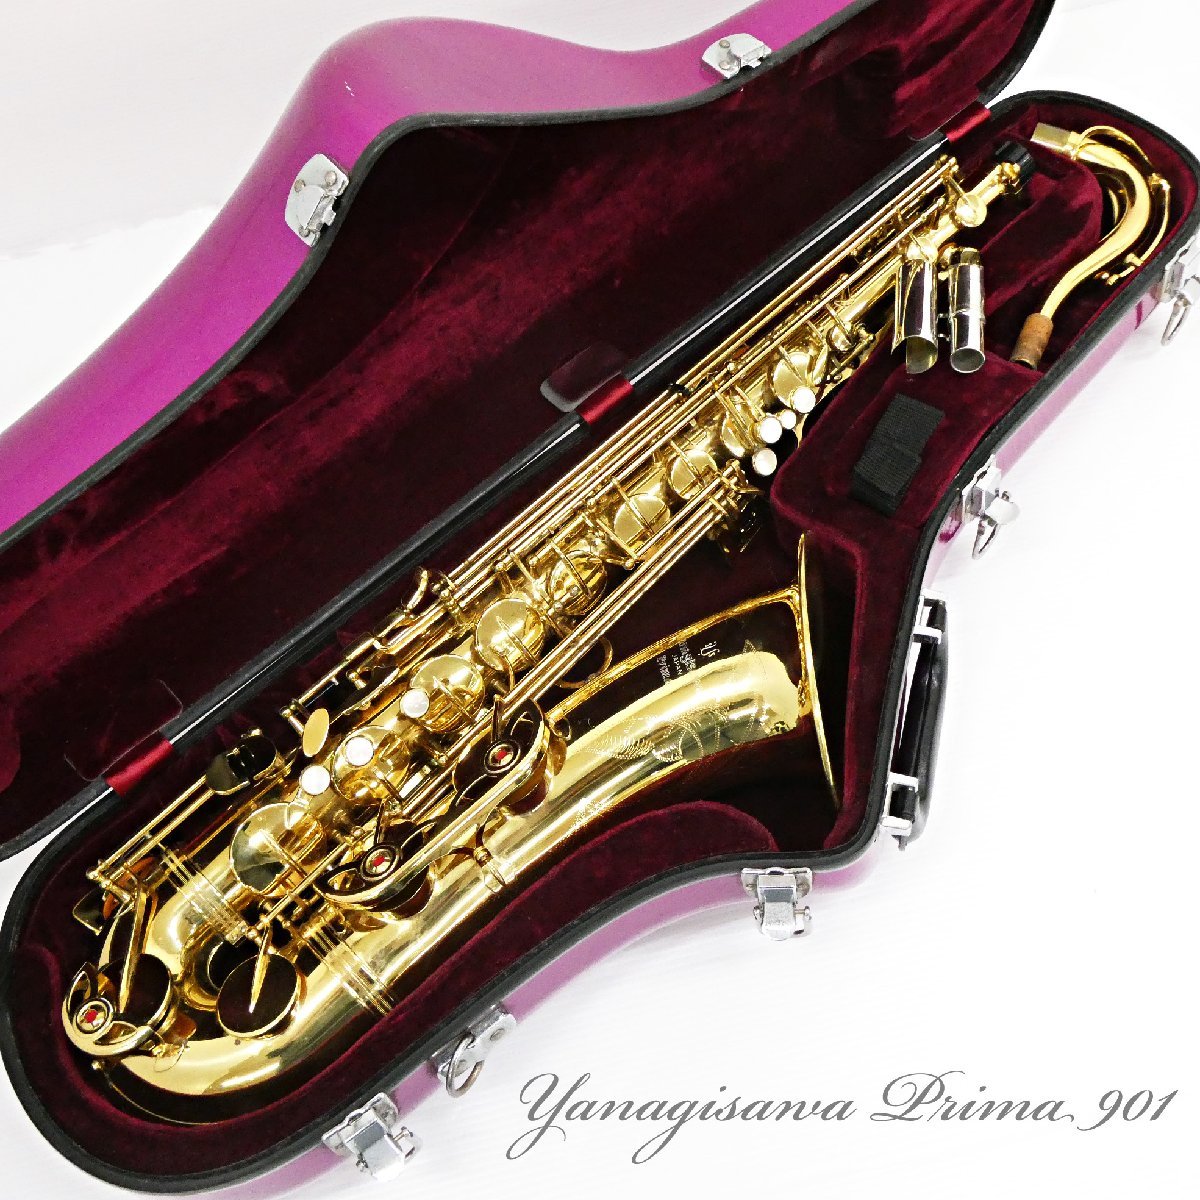 ○ Yanagisawa ヤナギサワ 901 テナーサックス 木管楽器 シルバーマウスピースNO.6 専用ケース付_画像1